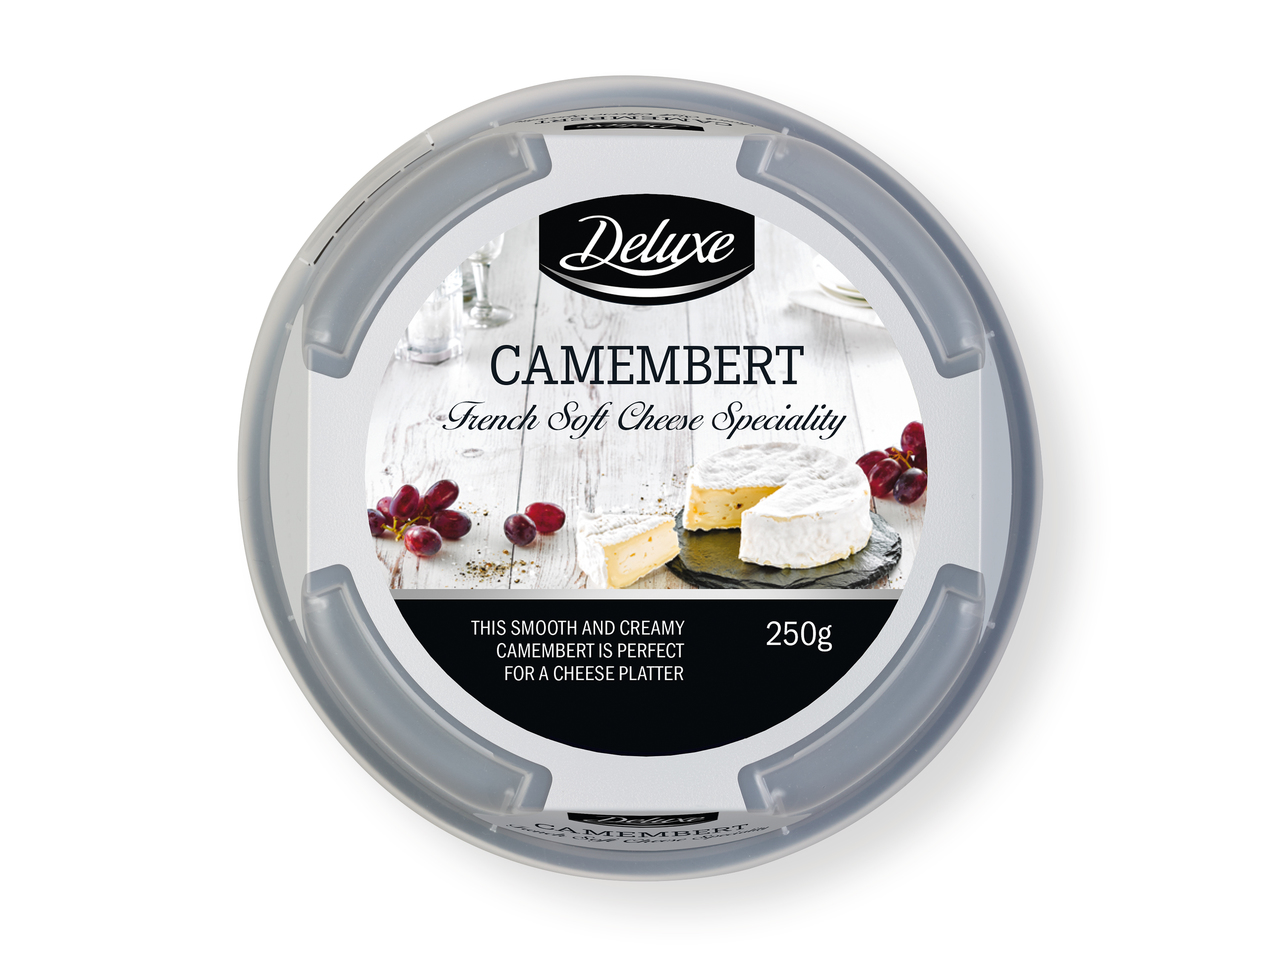 "Deluxe" Queso camembert